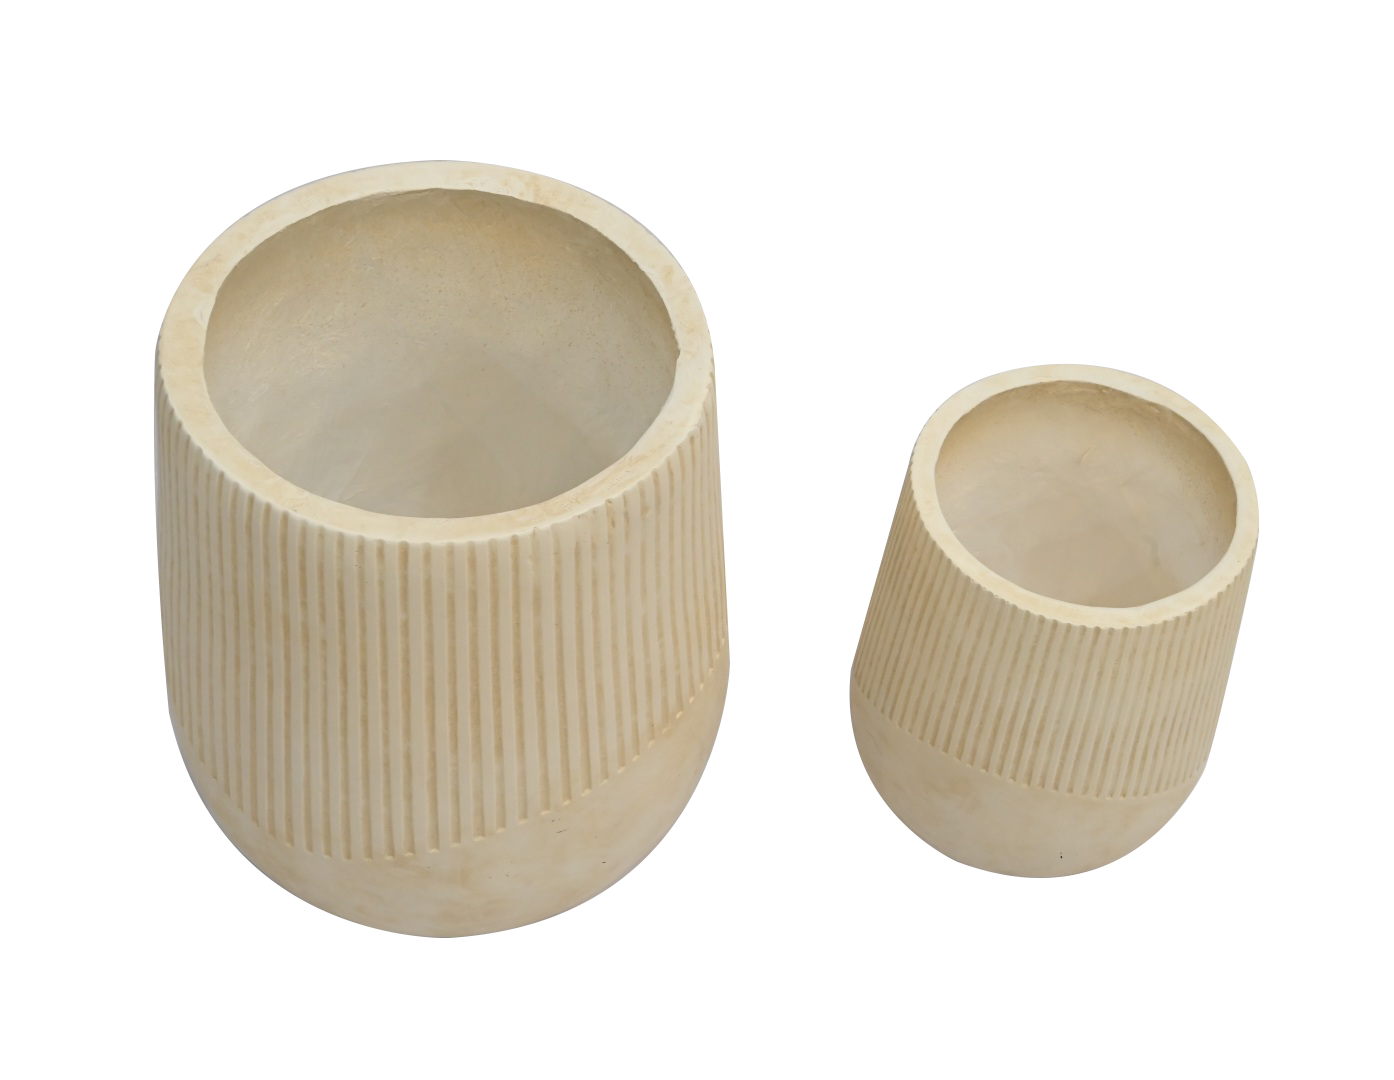 White Ceramic Flower Pots (2 Pcs)